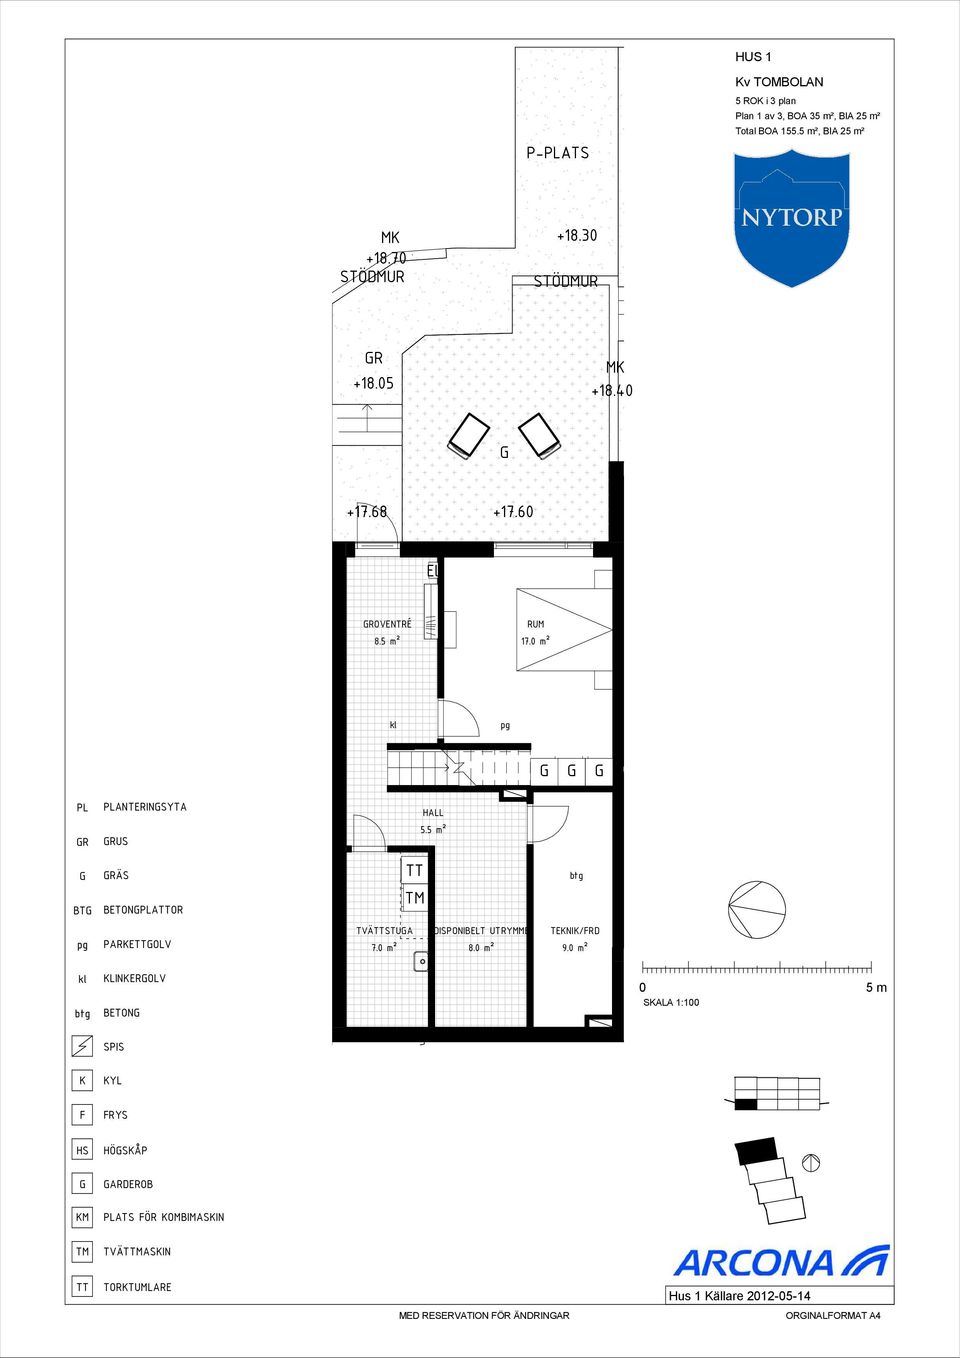 5 m² BT RÄS BETONAOR PAREOLV TVÄSTUA 7.0 m² DISPONIBELT UTRYMME TENI/RD 9.